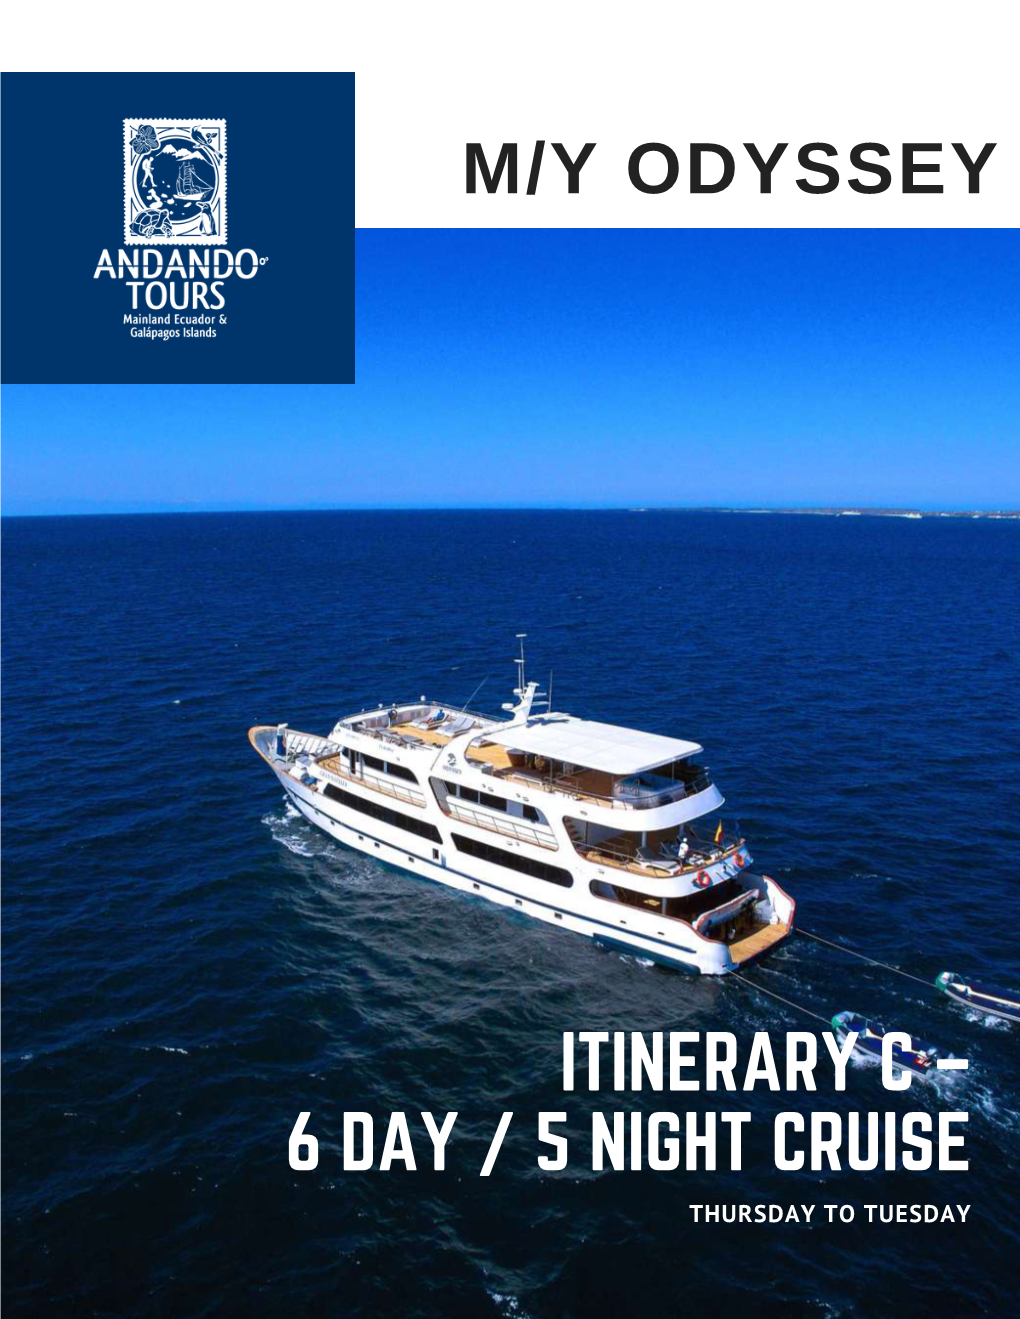 Odyssey Itinerary C